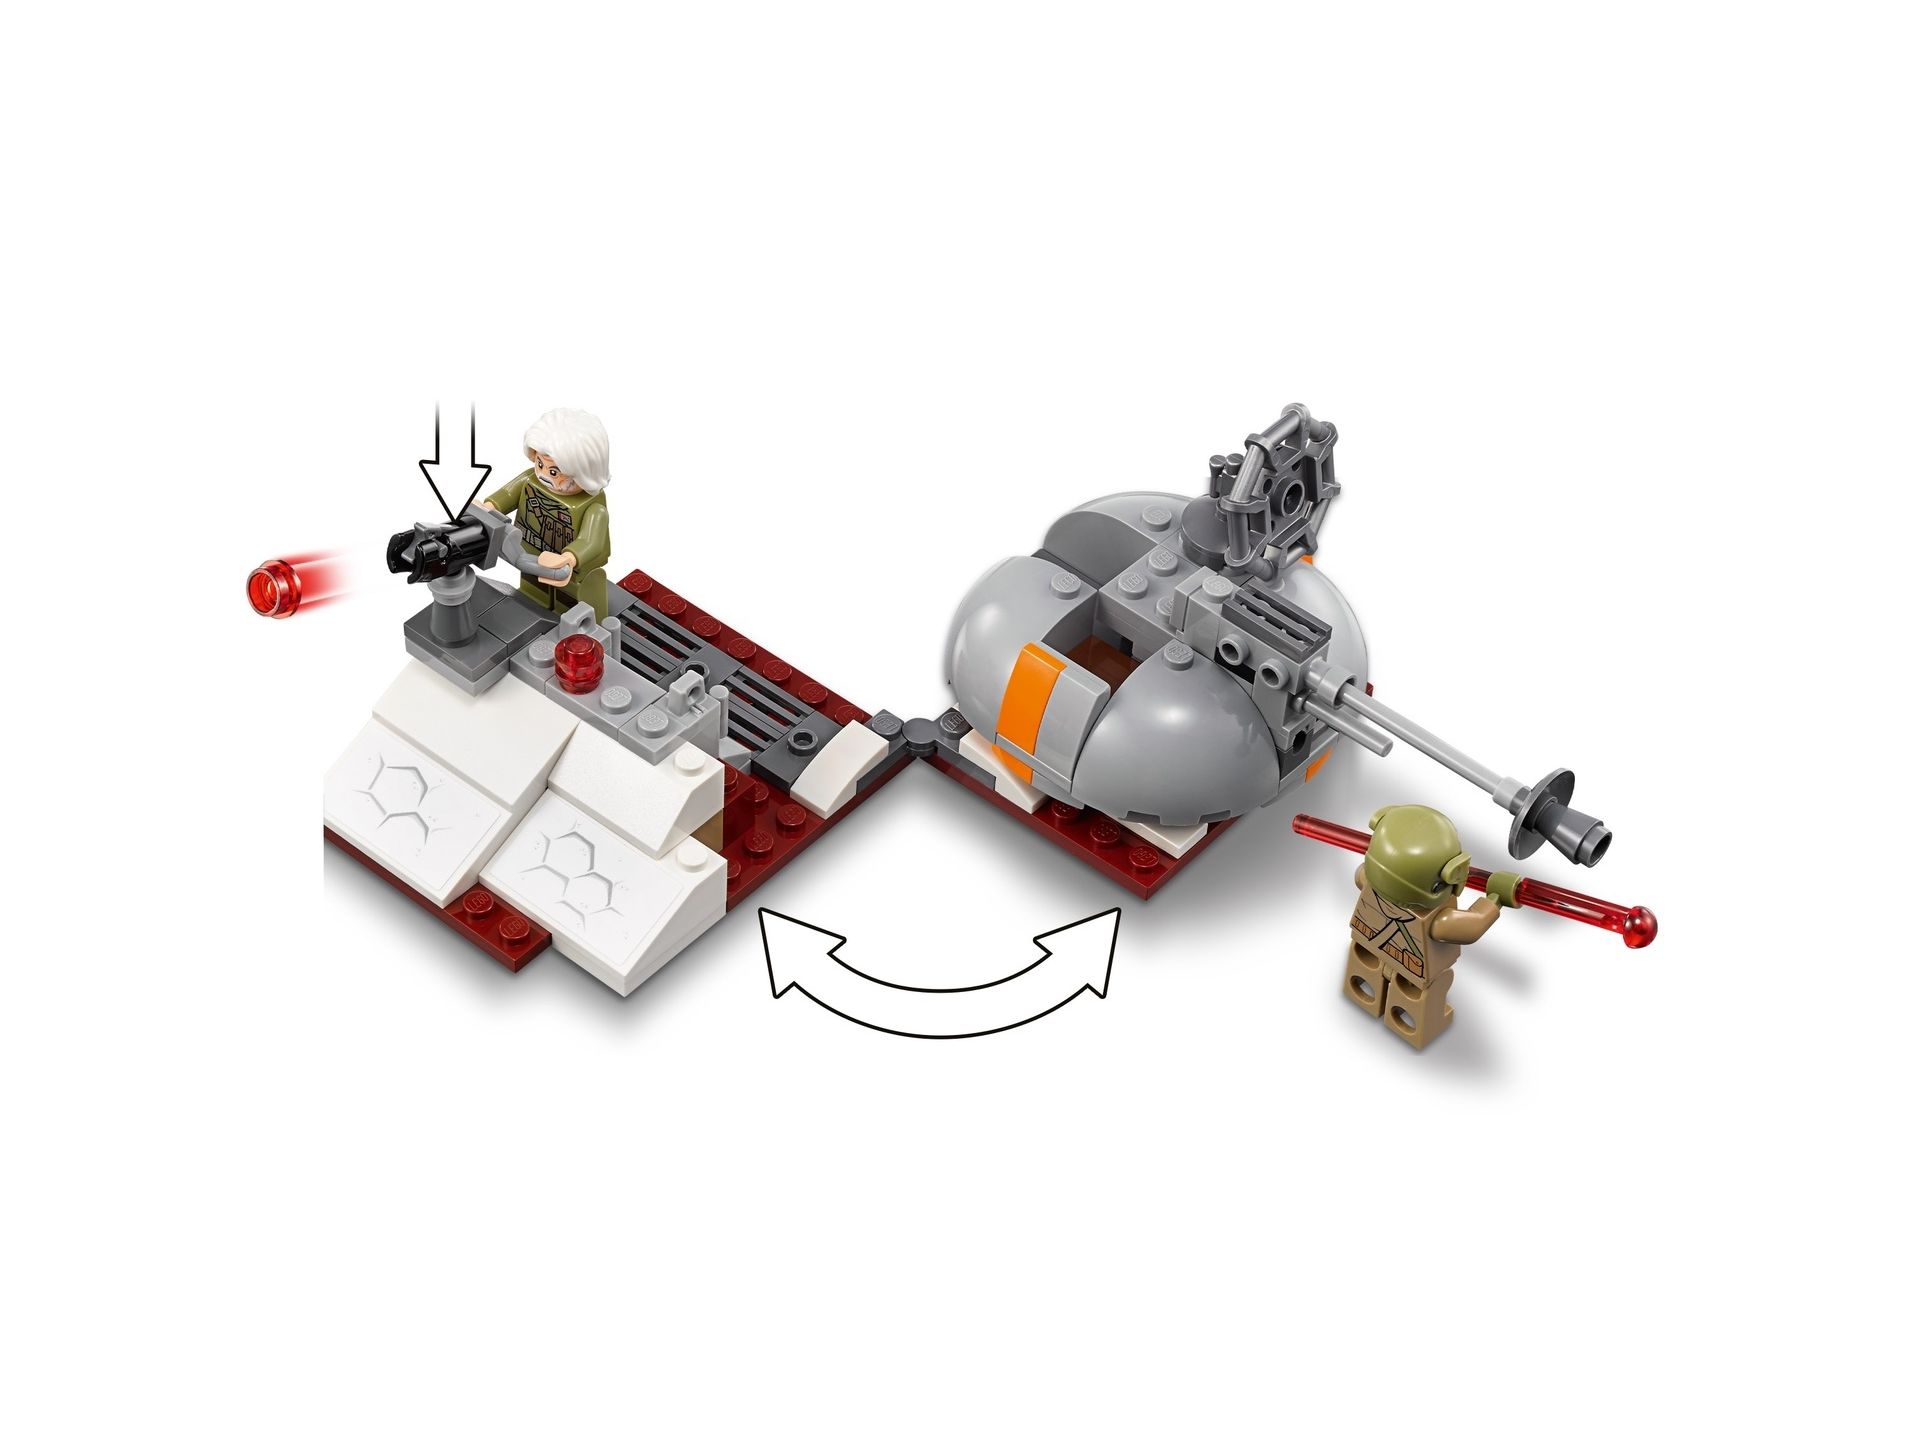  LEGO Star Wars: The Last Jedi Defense of Crait 75202